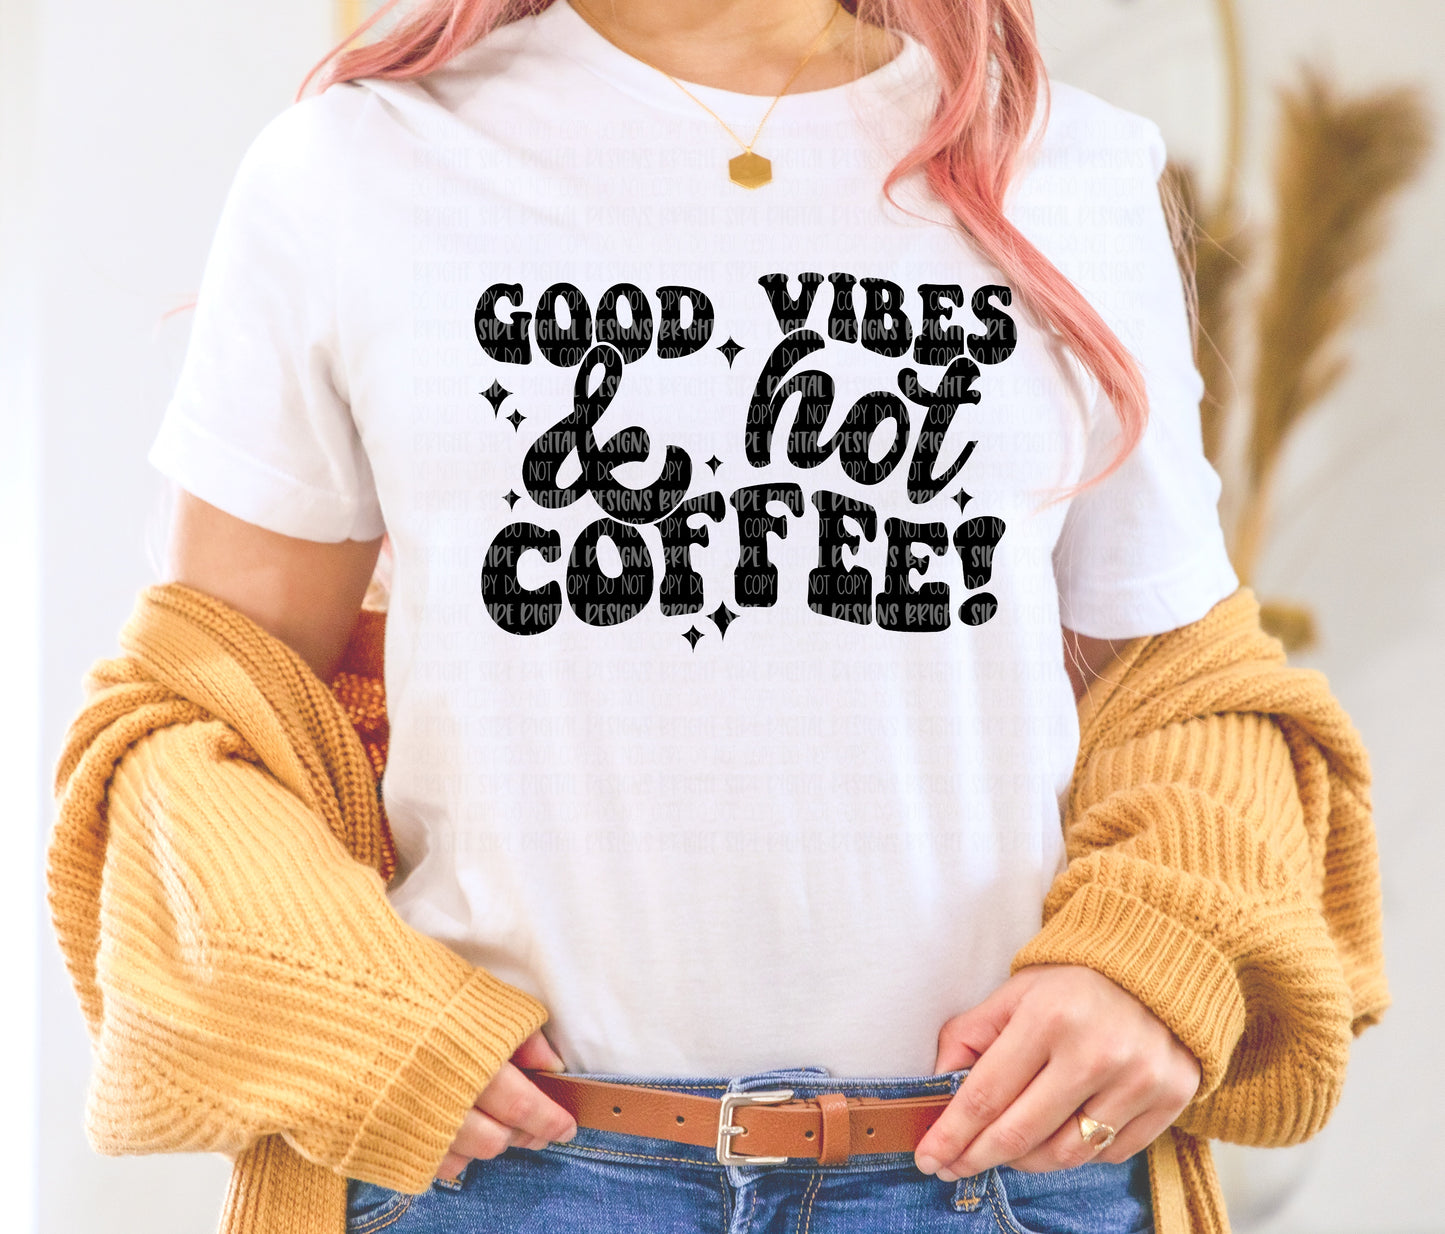 Good vibes & hot coffee